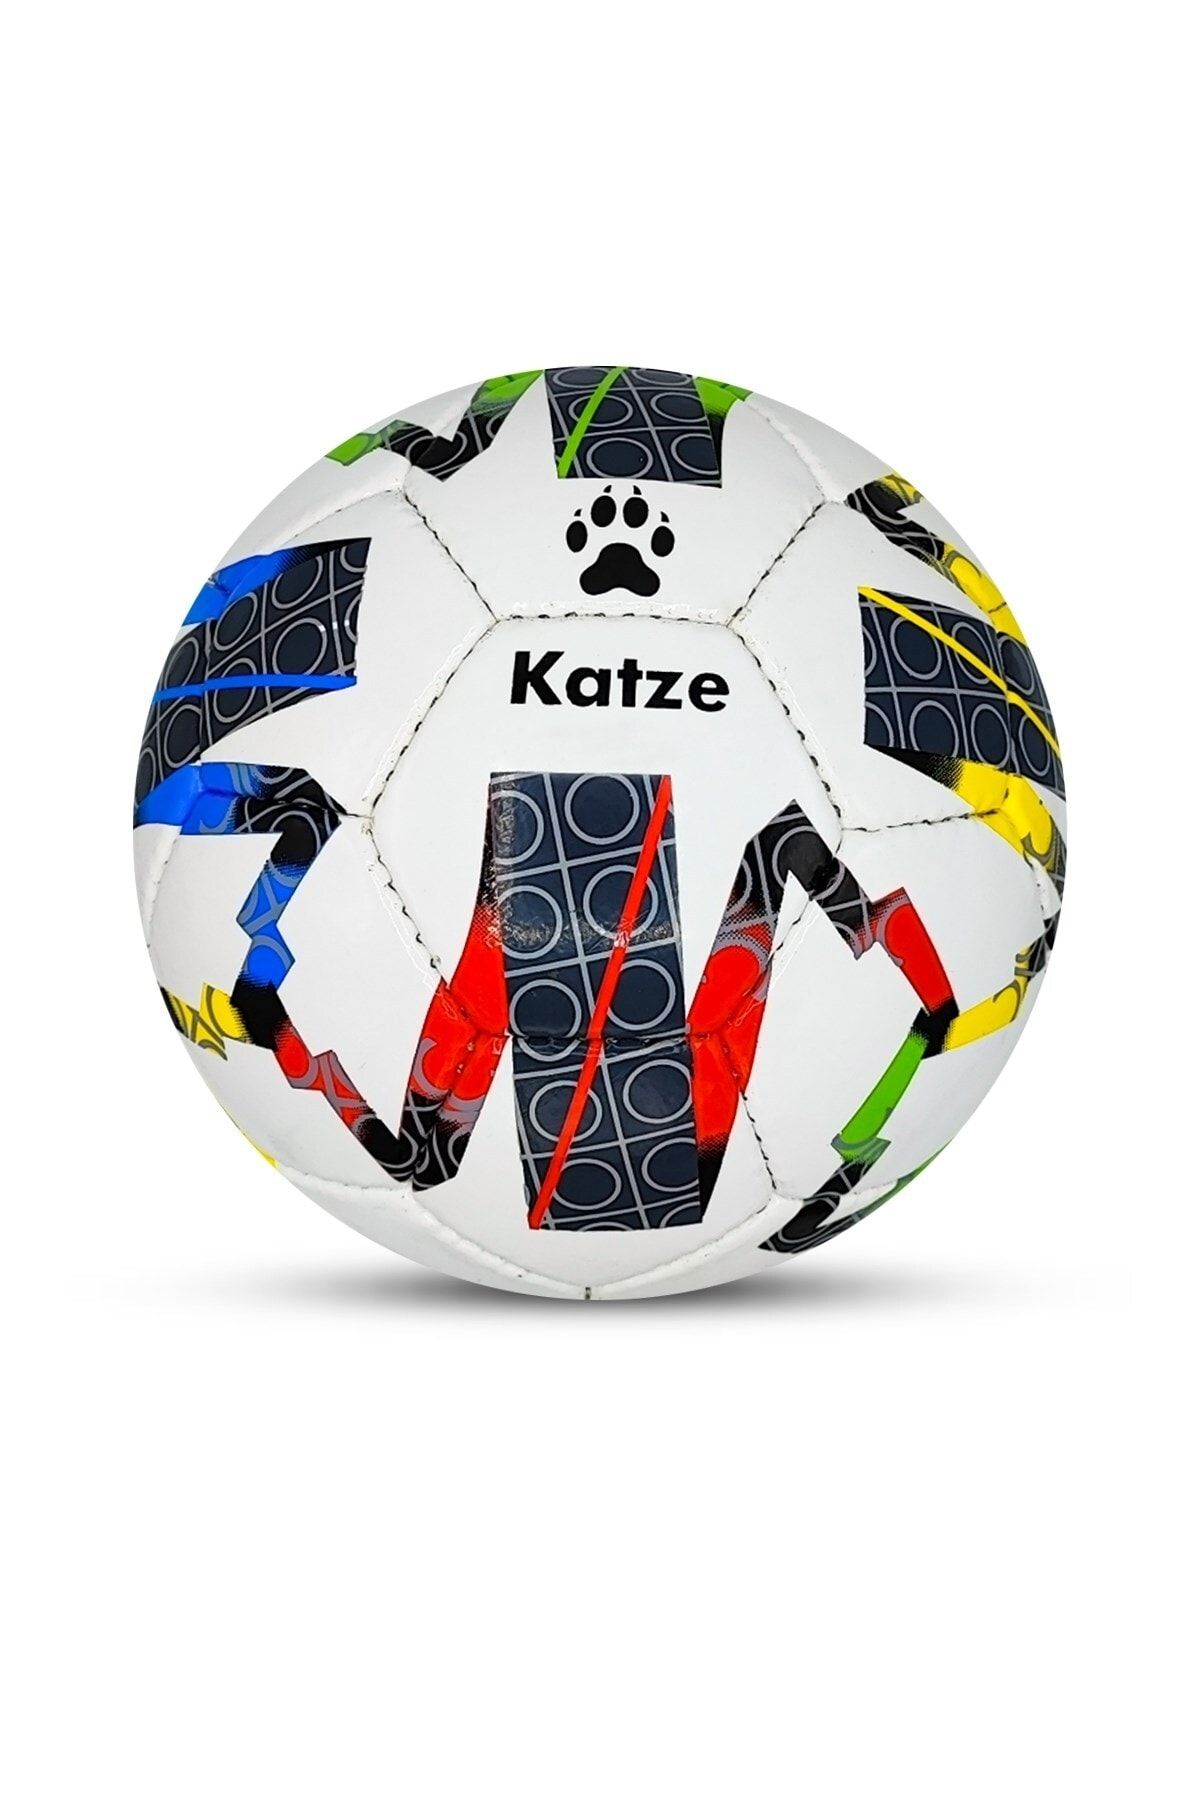 Tosima Katze El Dikişli Premium Futbol Topu Halı Saha Topu Maç Topu Profesyonel